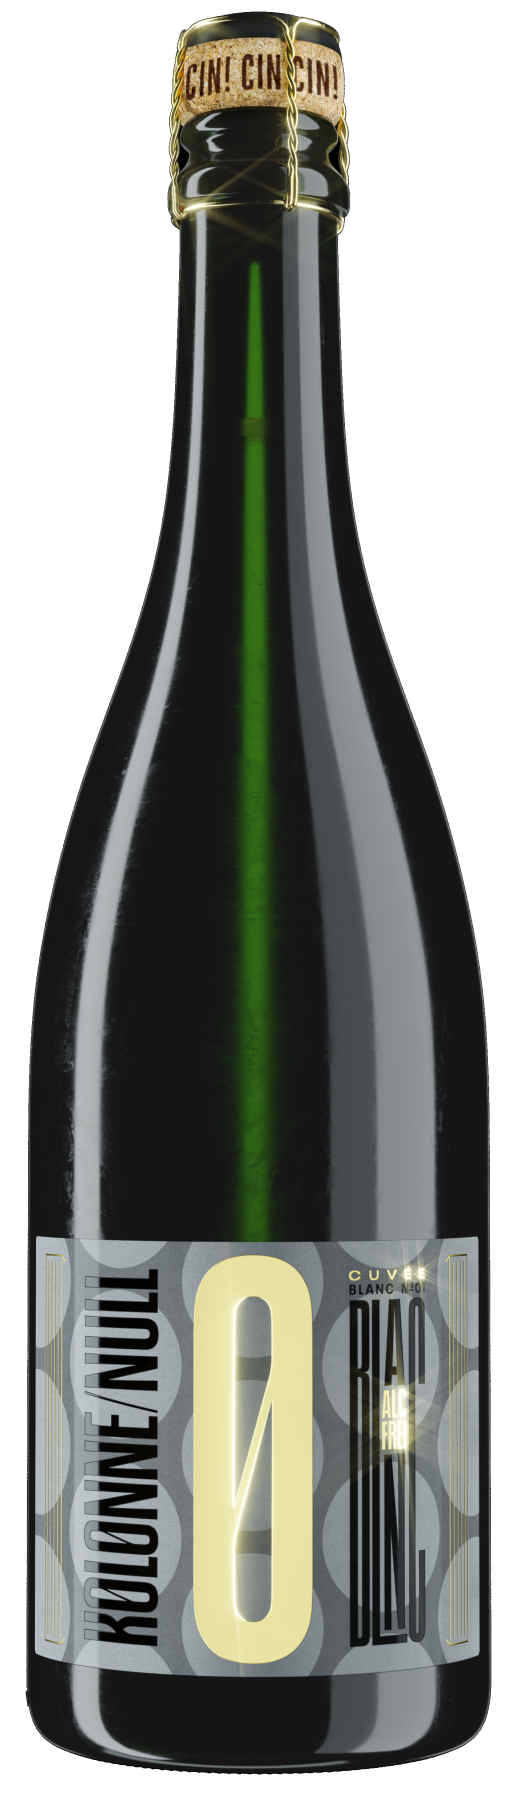 Kolonne Null Cuvée Blanc No.01 prickelnd alkoholfrei